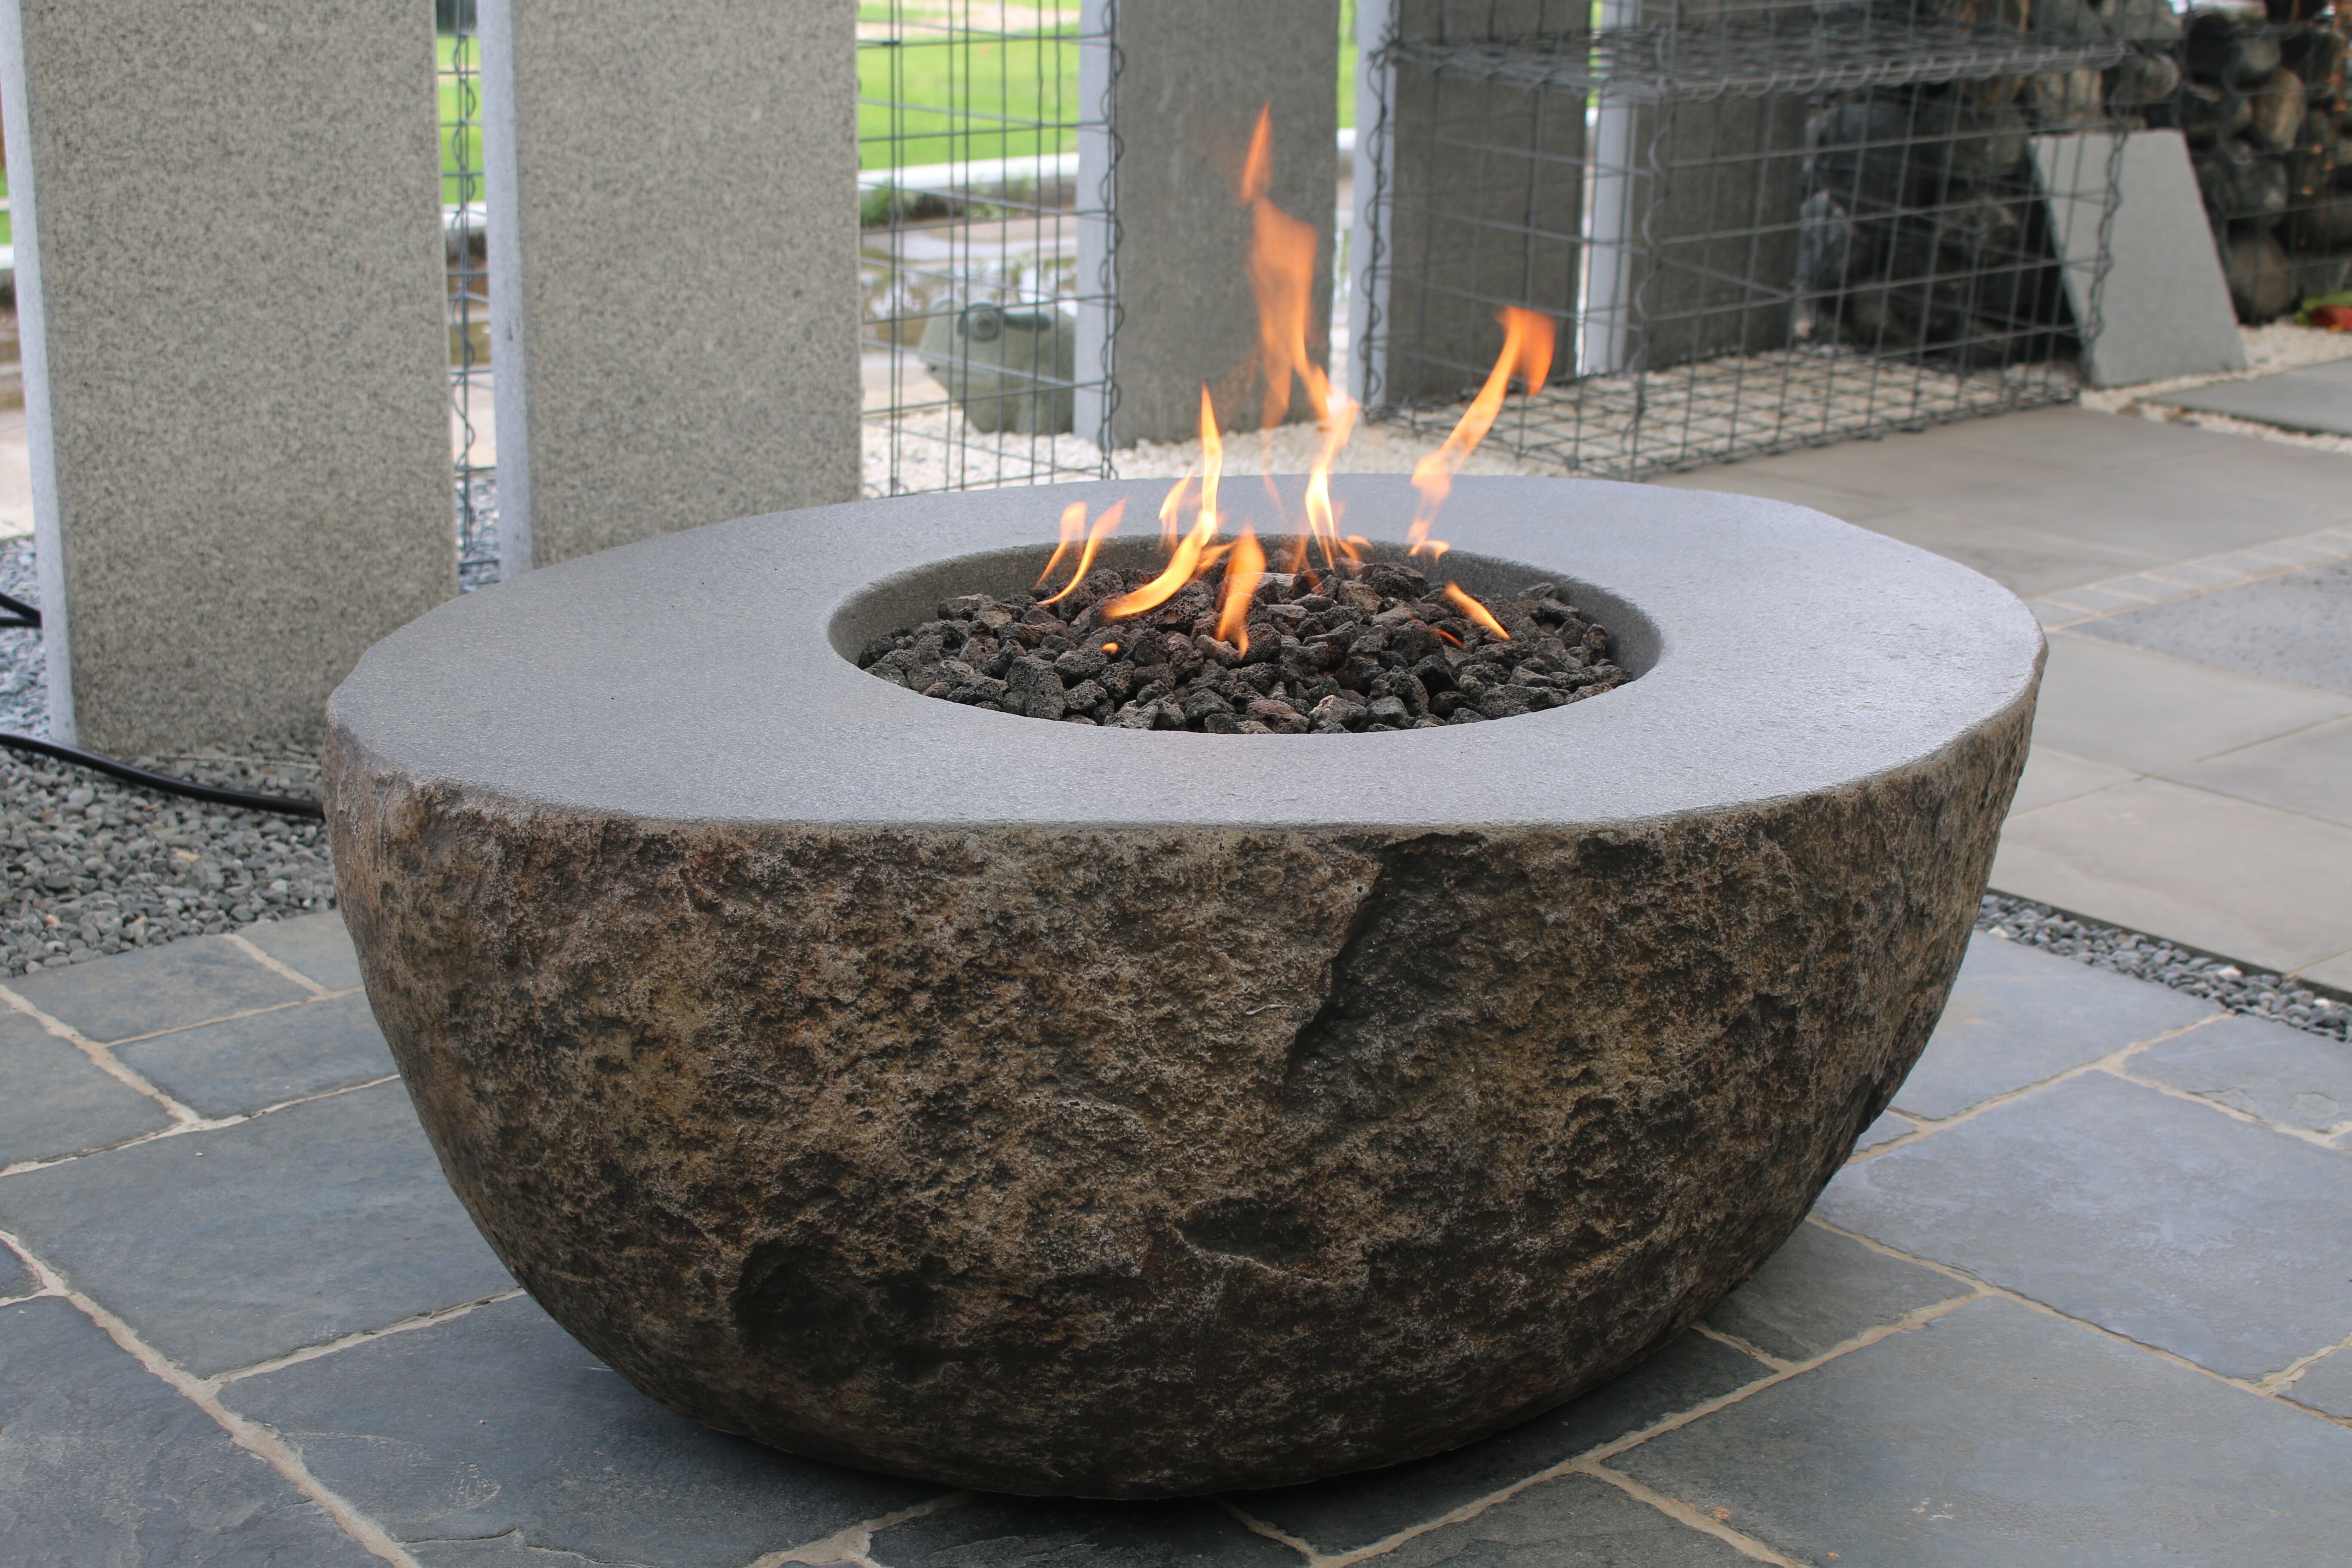 Elementi Boulder Concrete Propane Natural Gas Fire Pit Table Reviews Wayfair